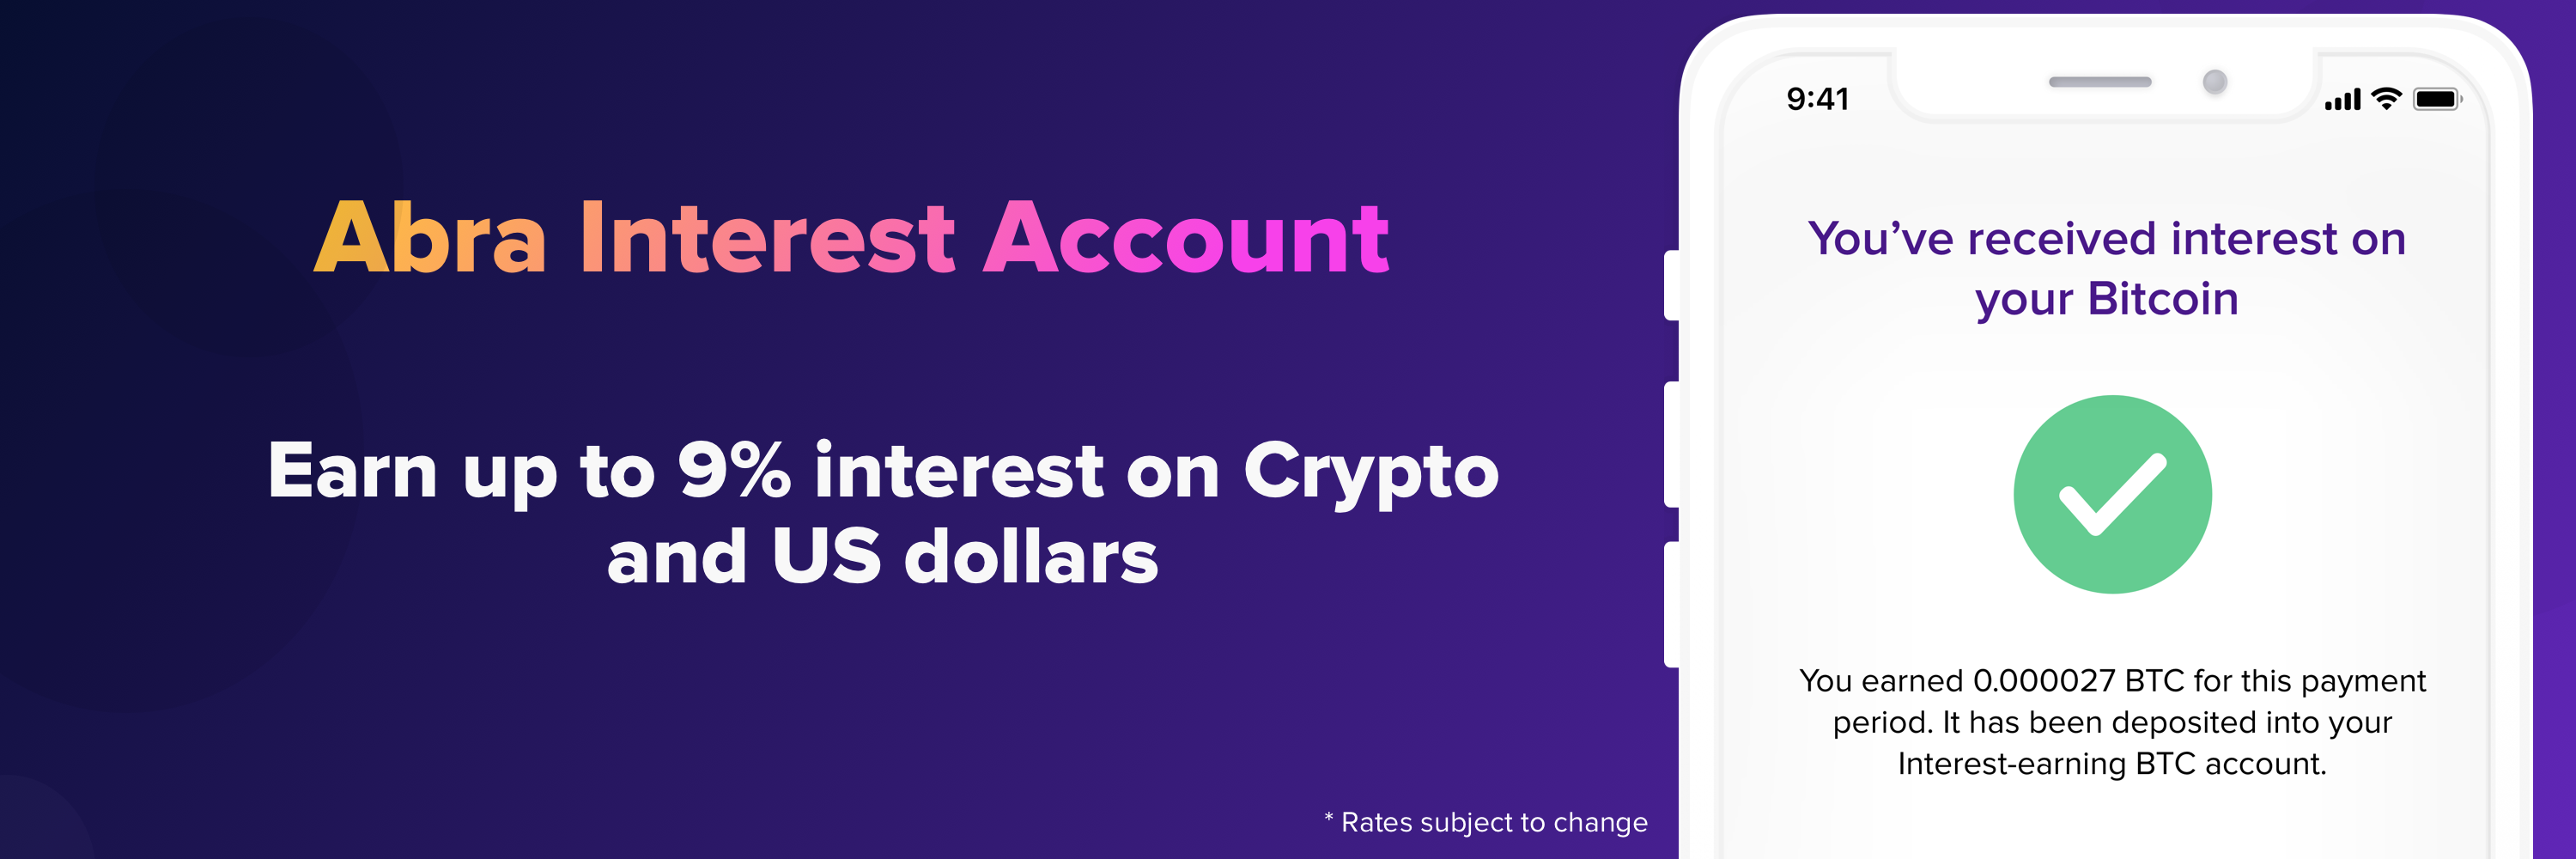 Abra Interest Account - Earn interest on crypto